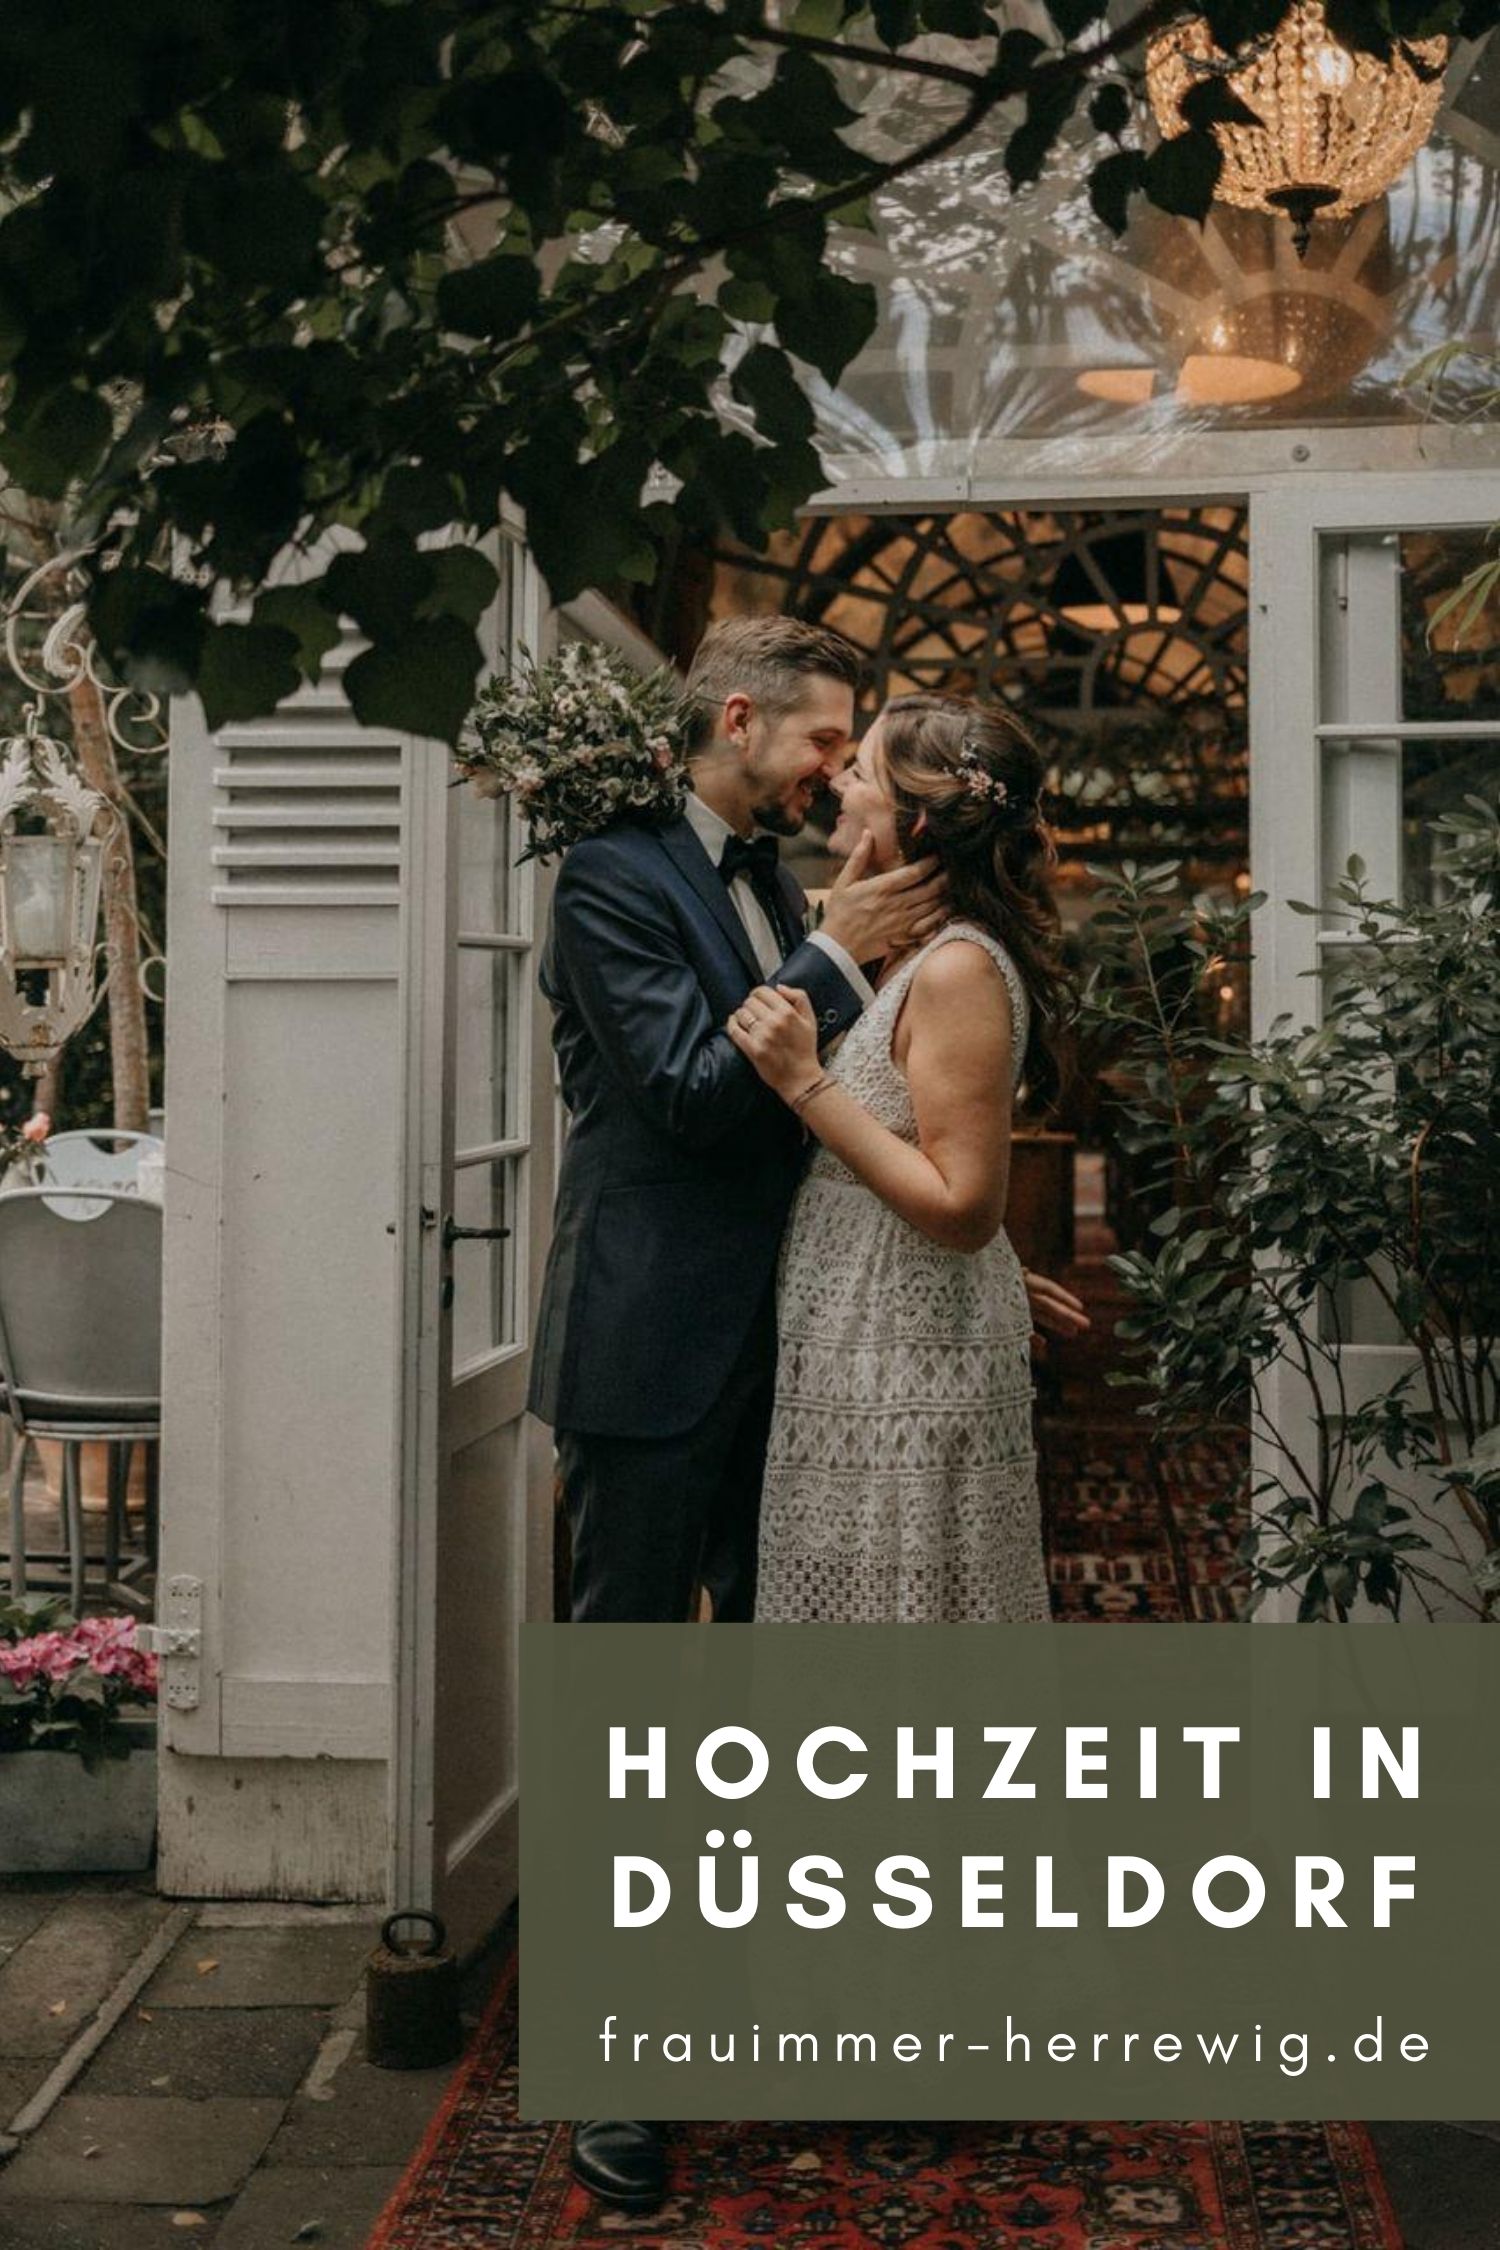 Heiraten in duesseldorf – gesehen bei frauimmer-herrewig.de